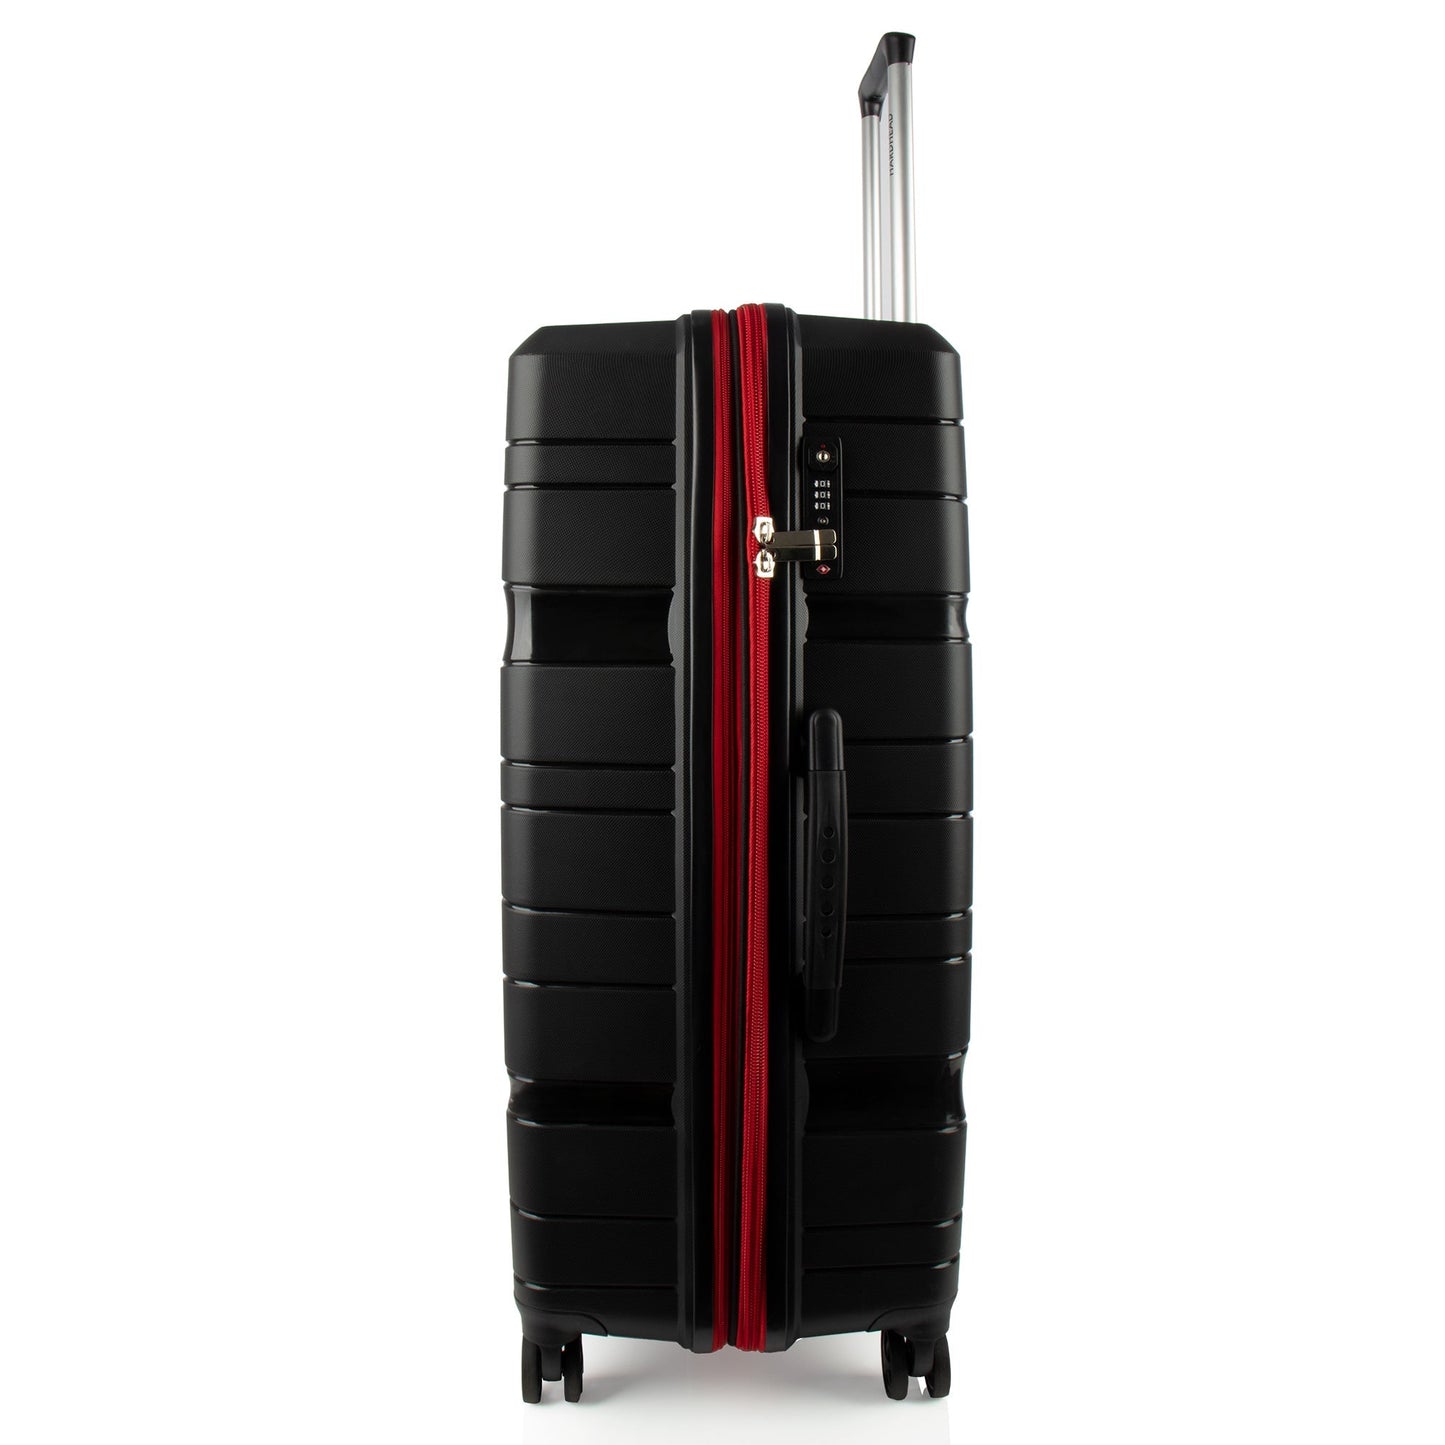 Polyprop Black 3 pieces luggage set